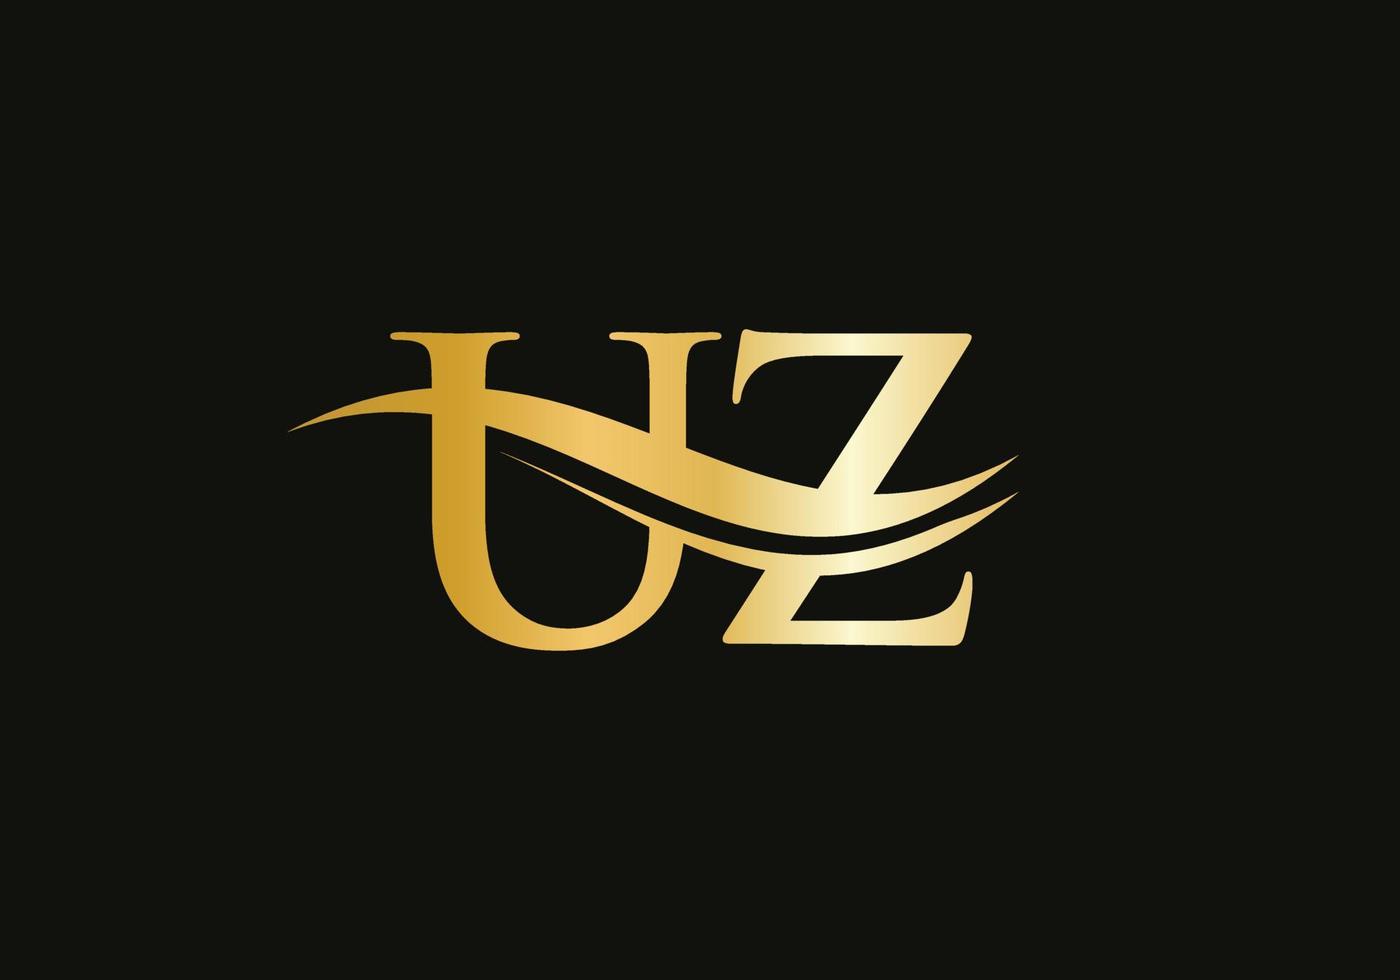 Water Wave UZ Logo Vector. Swoosh Letter UZ Logo Design for business and company identity vector